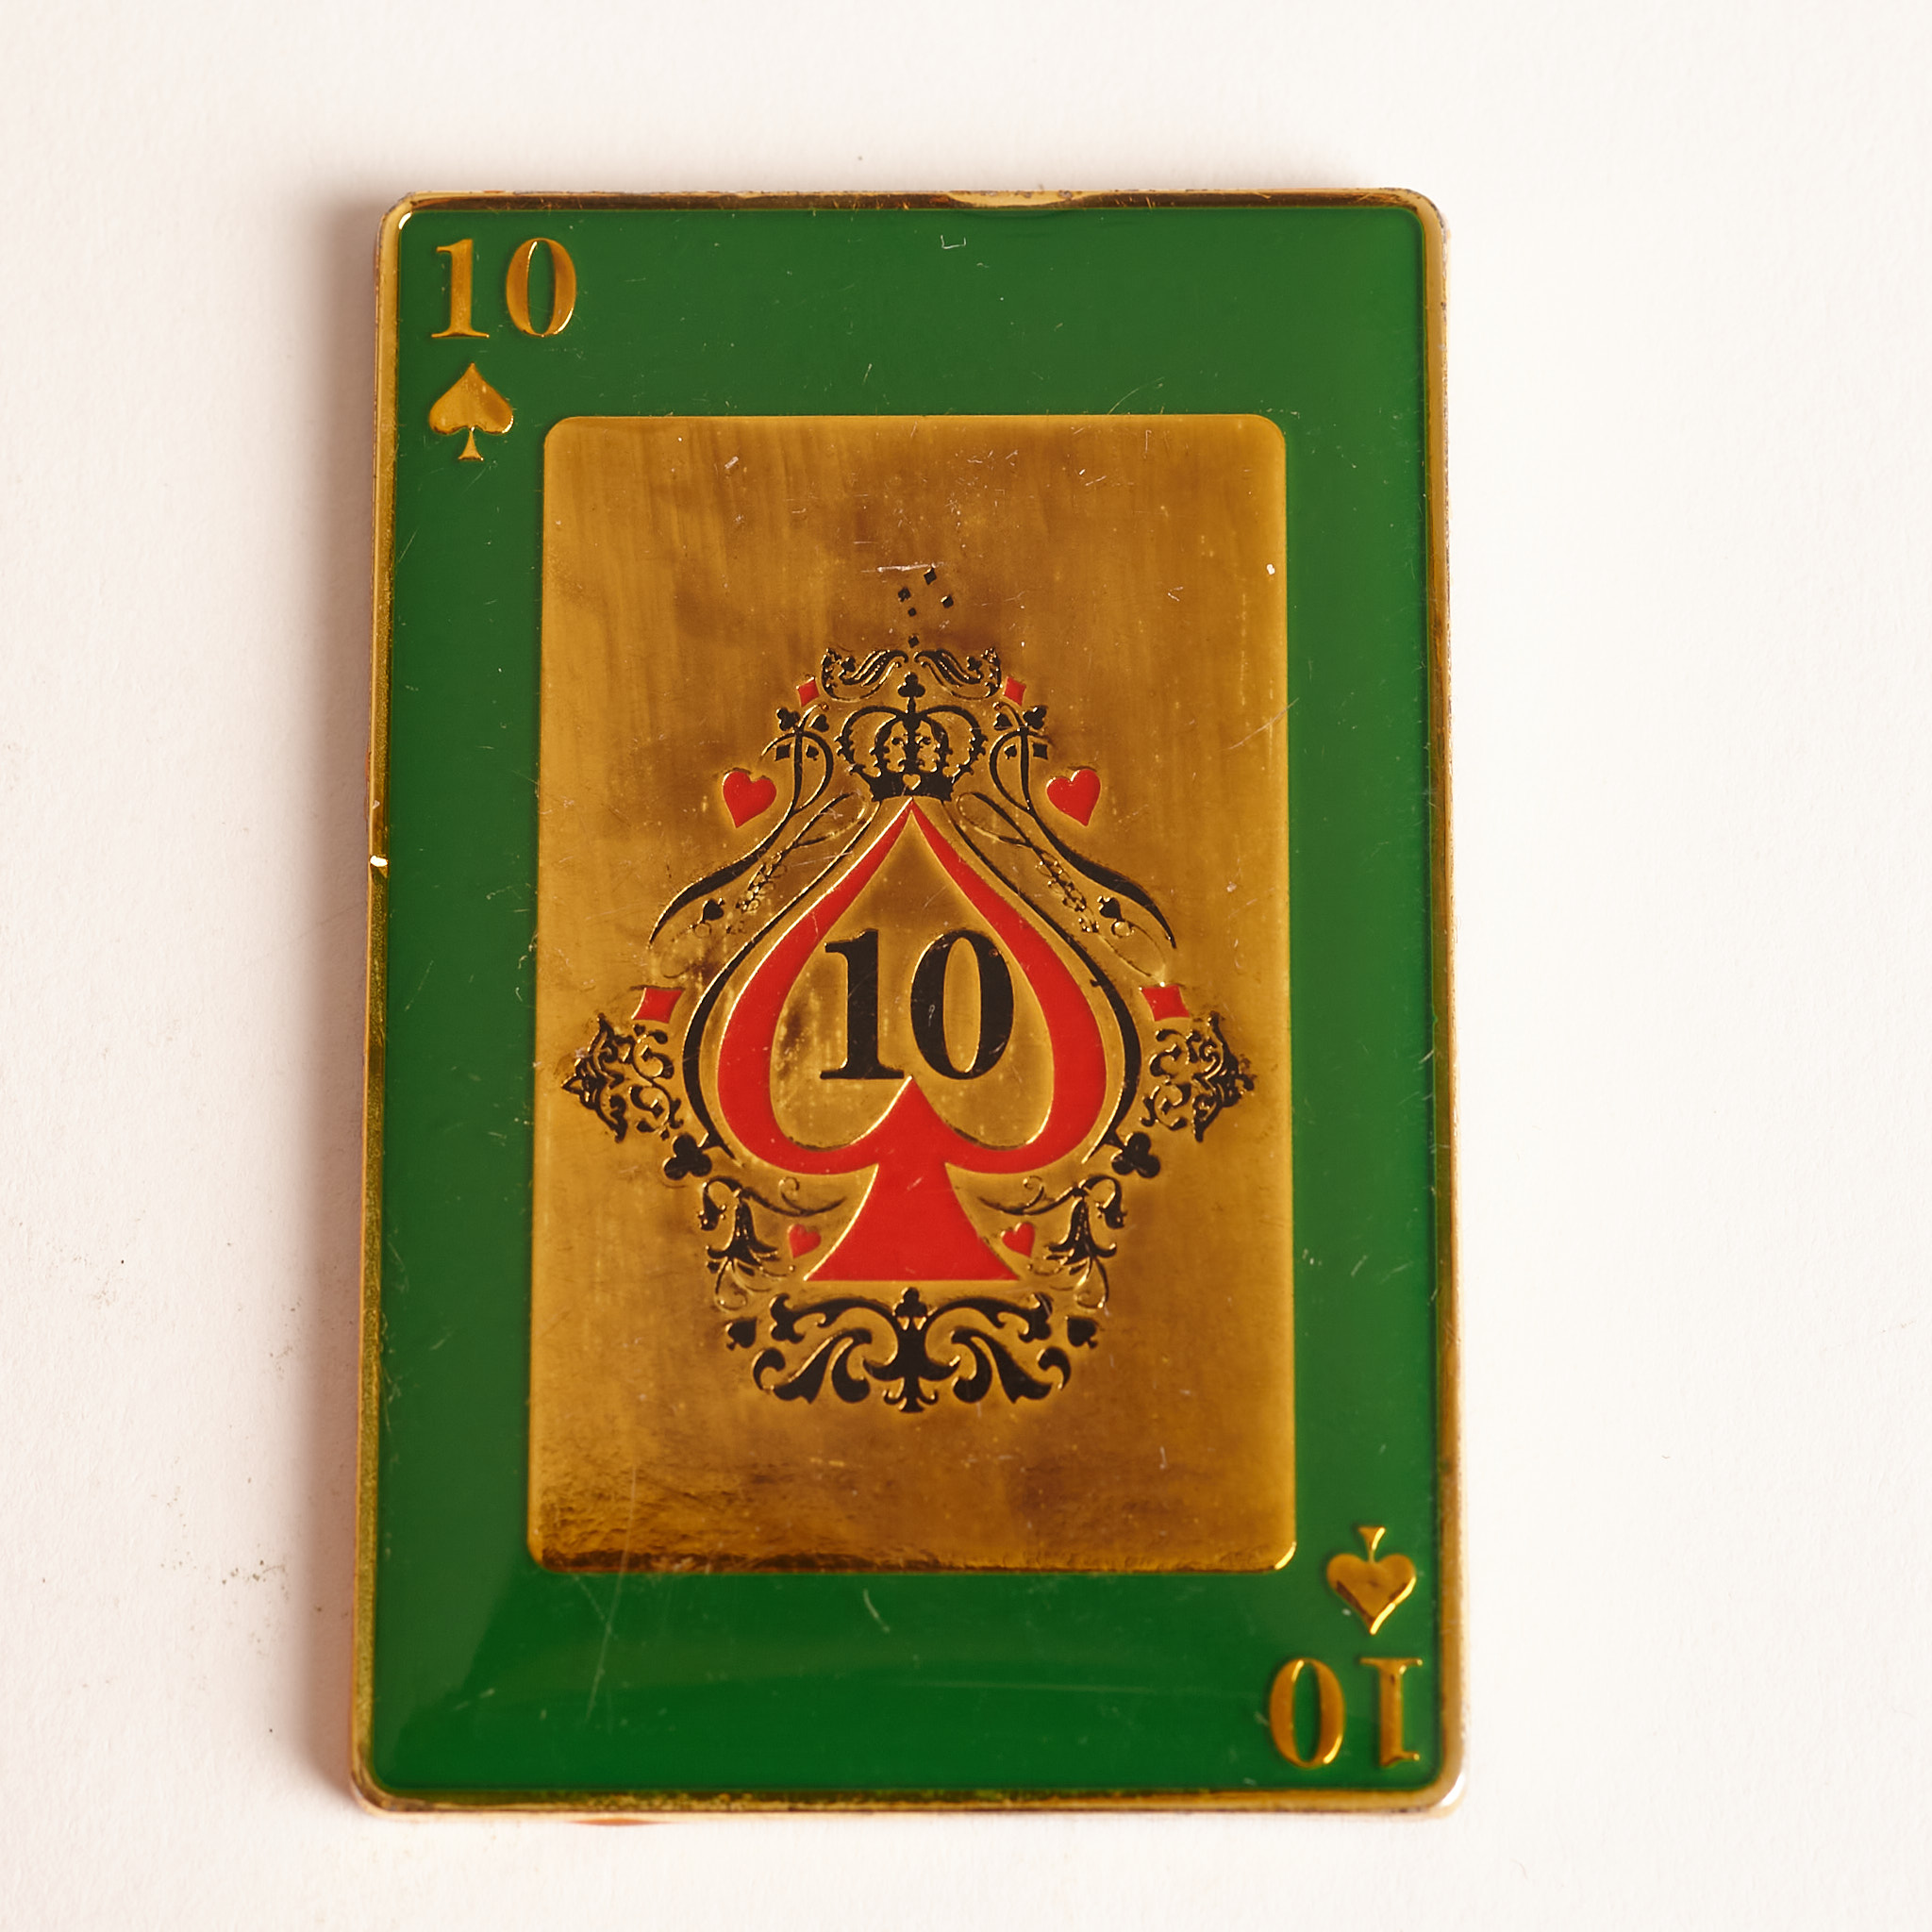 888 POKER LEAGUE, 10 SPADES, TOURNAMENT WINNER, ROYAL FLUSH SERIES, Poker Card Guard